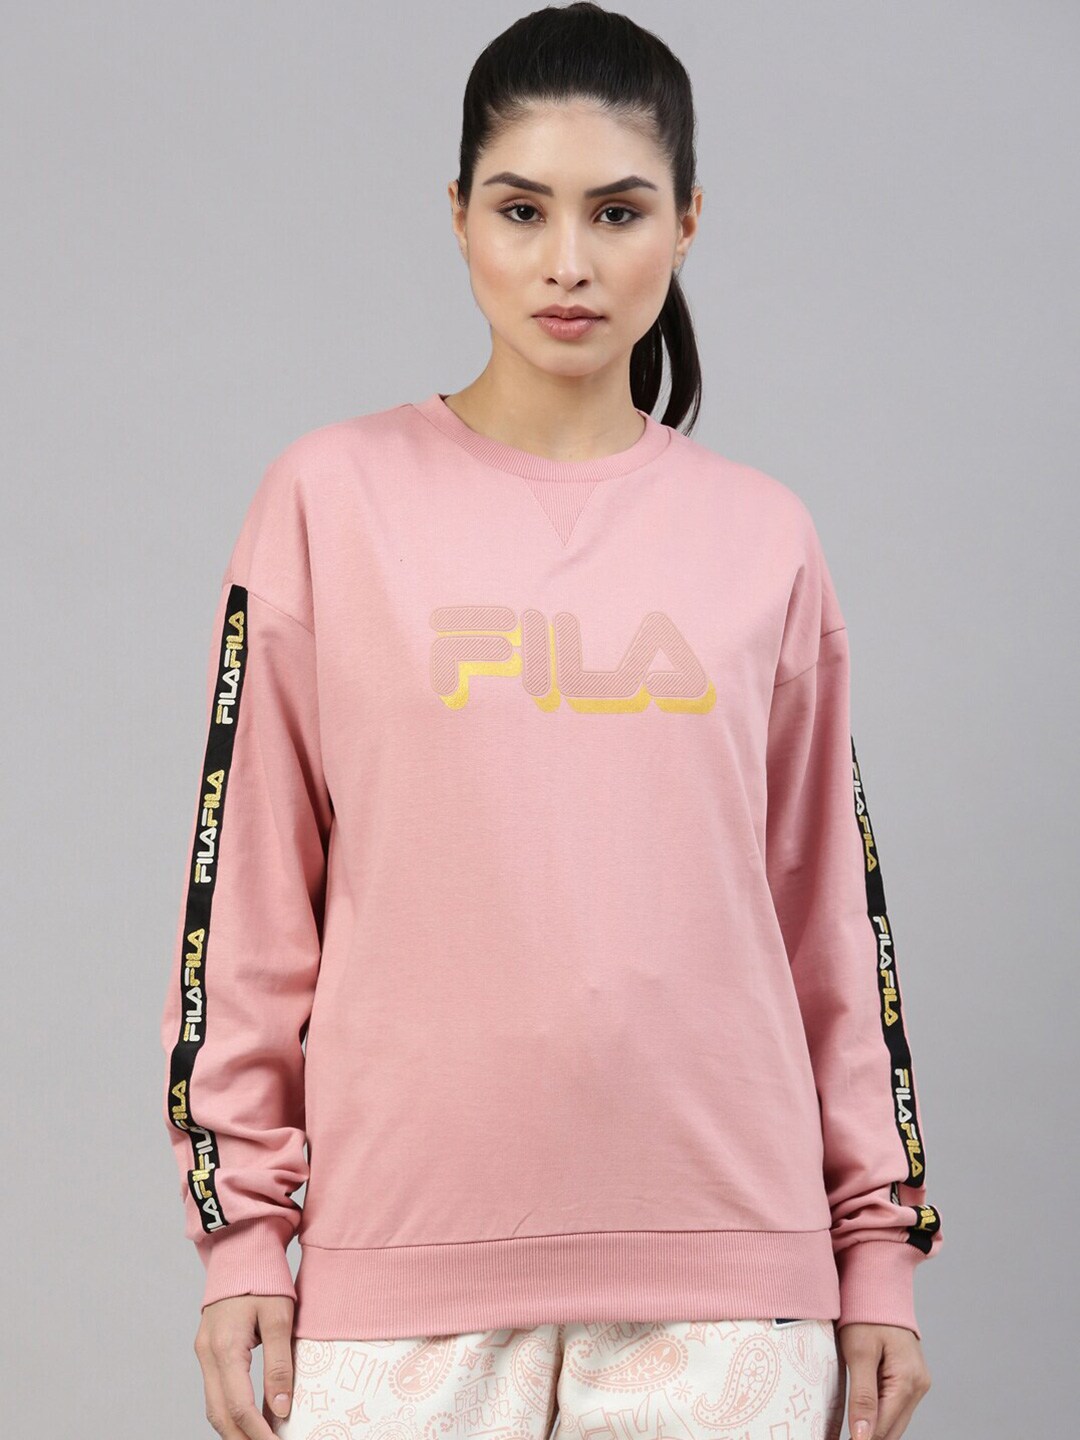 FILA Women Pink Printed Sweatshirt Price in India